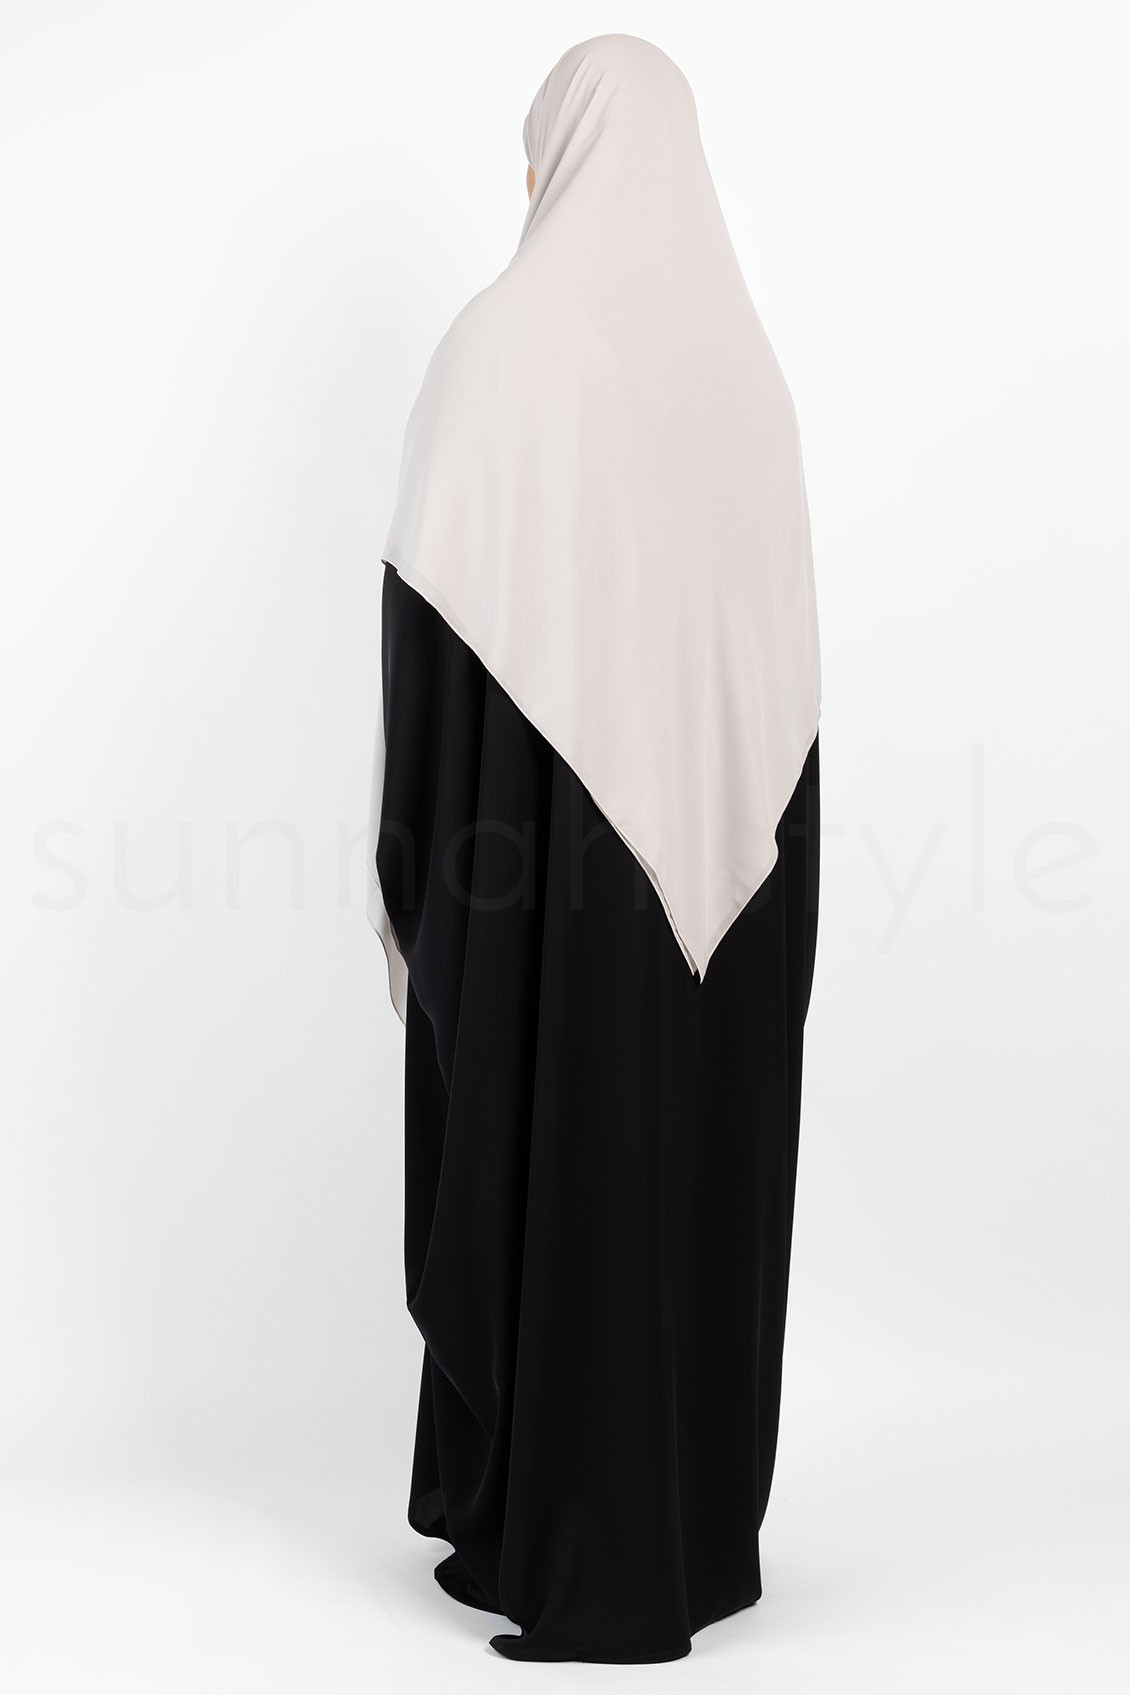 Sunnah Style Essentials Square Hijab XL Smoke